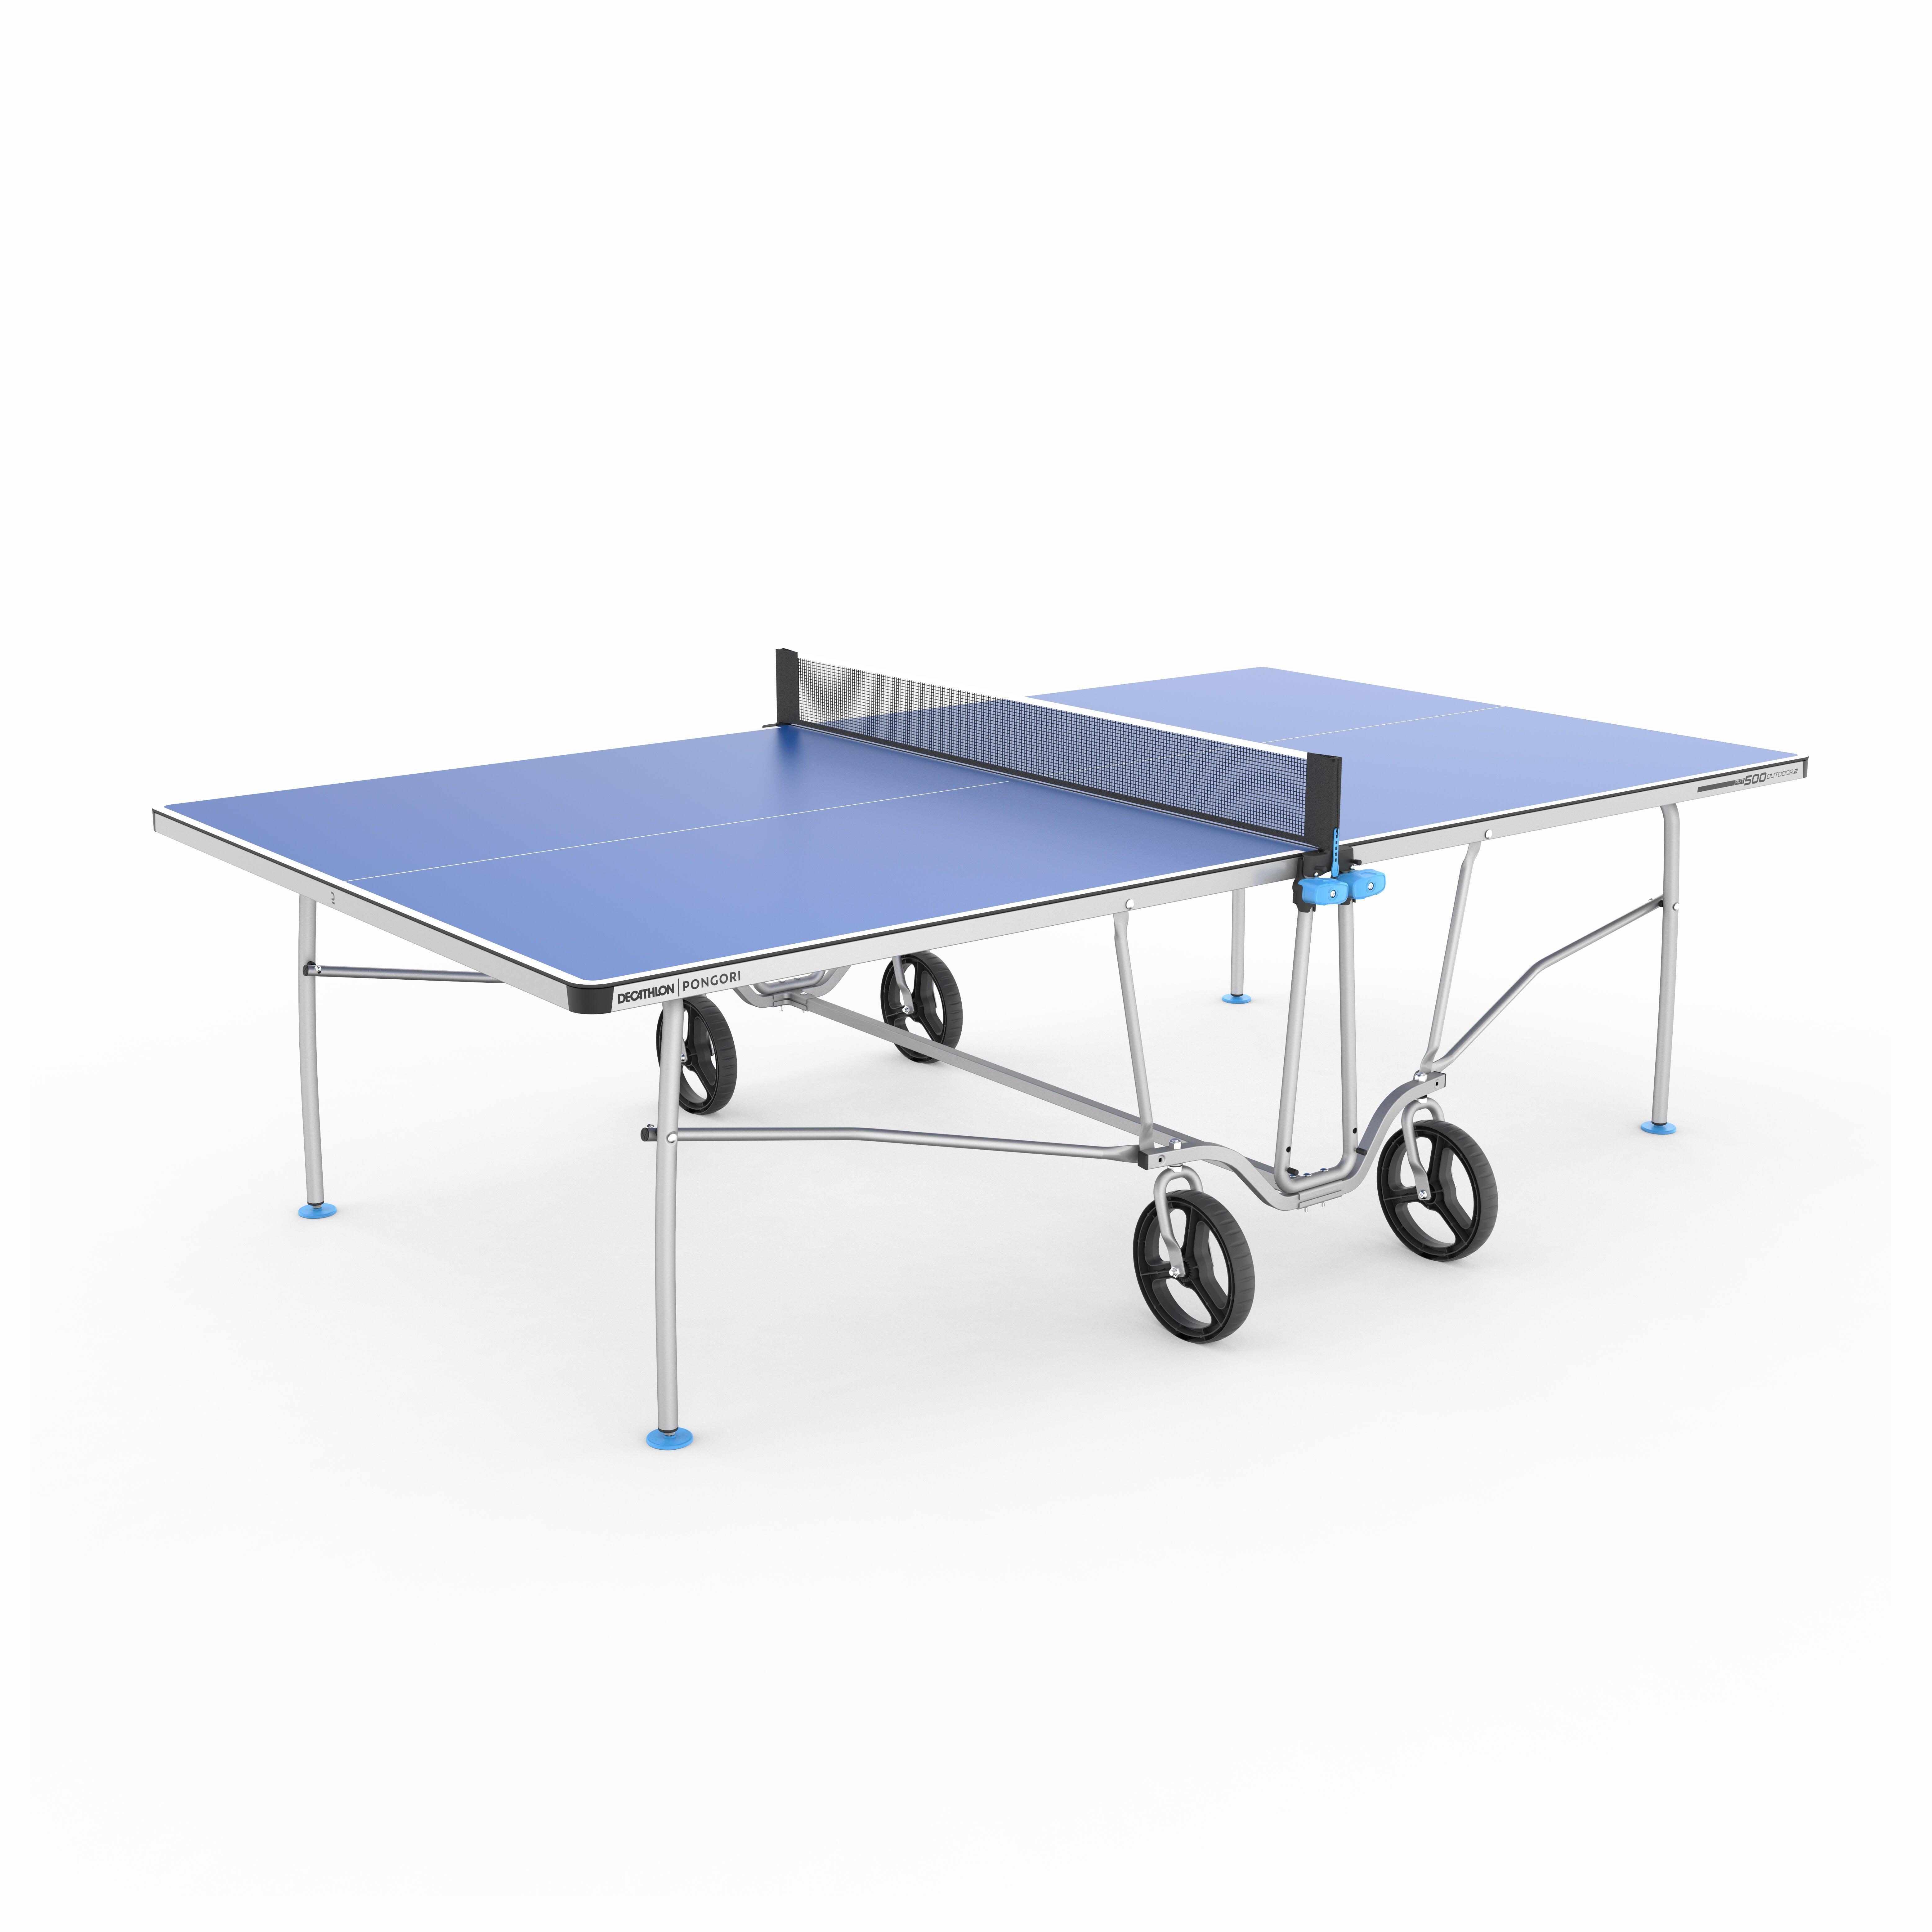 Decathlon Outdoor Table Tennis Table Ppt 500.2